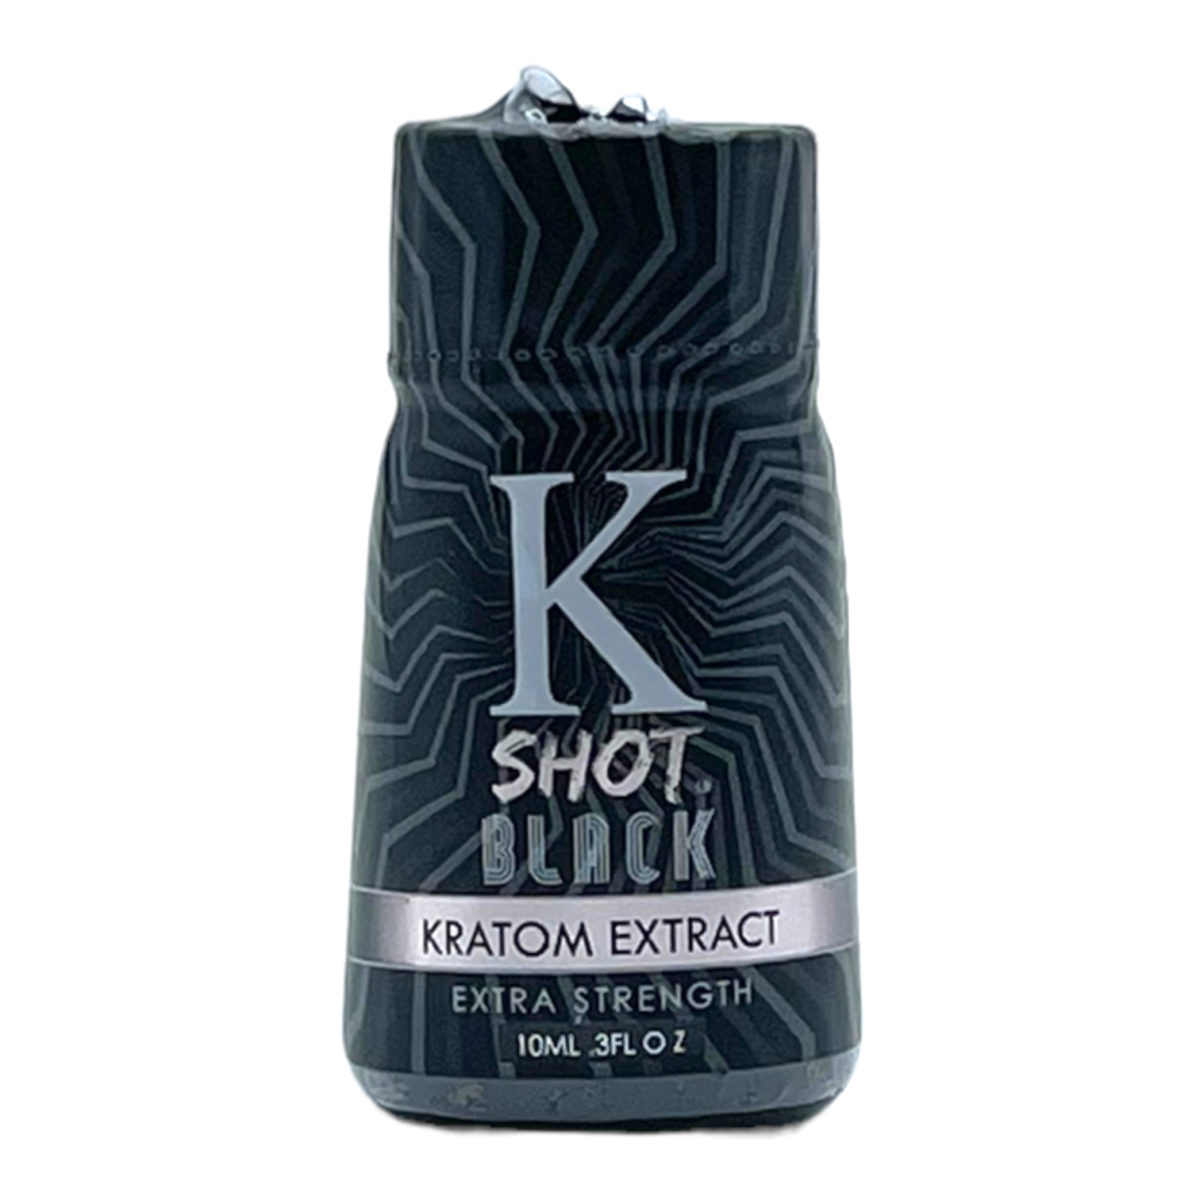 K-Shot Black Kratom Extract Shot – 10ml